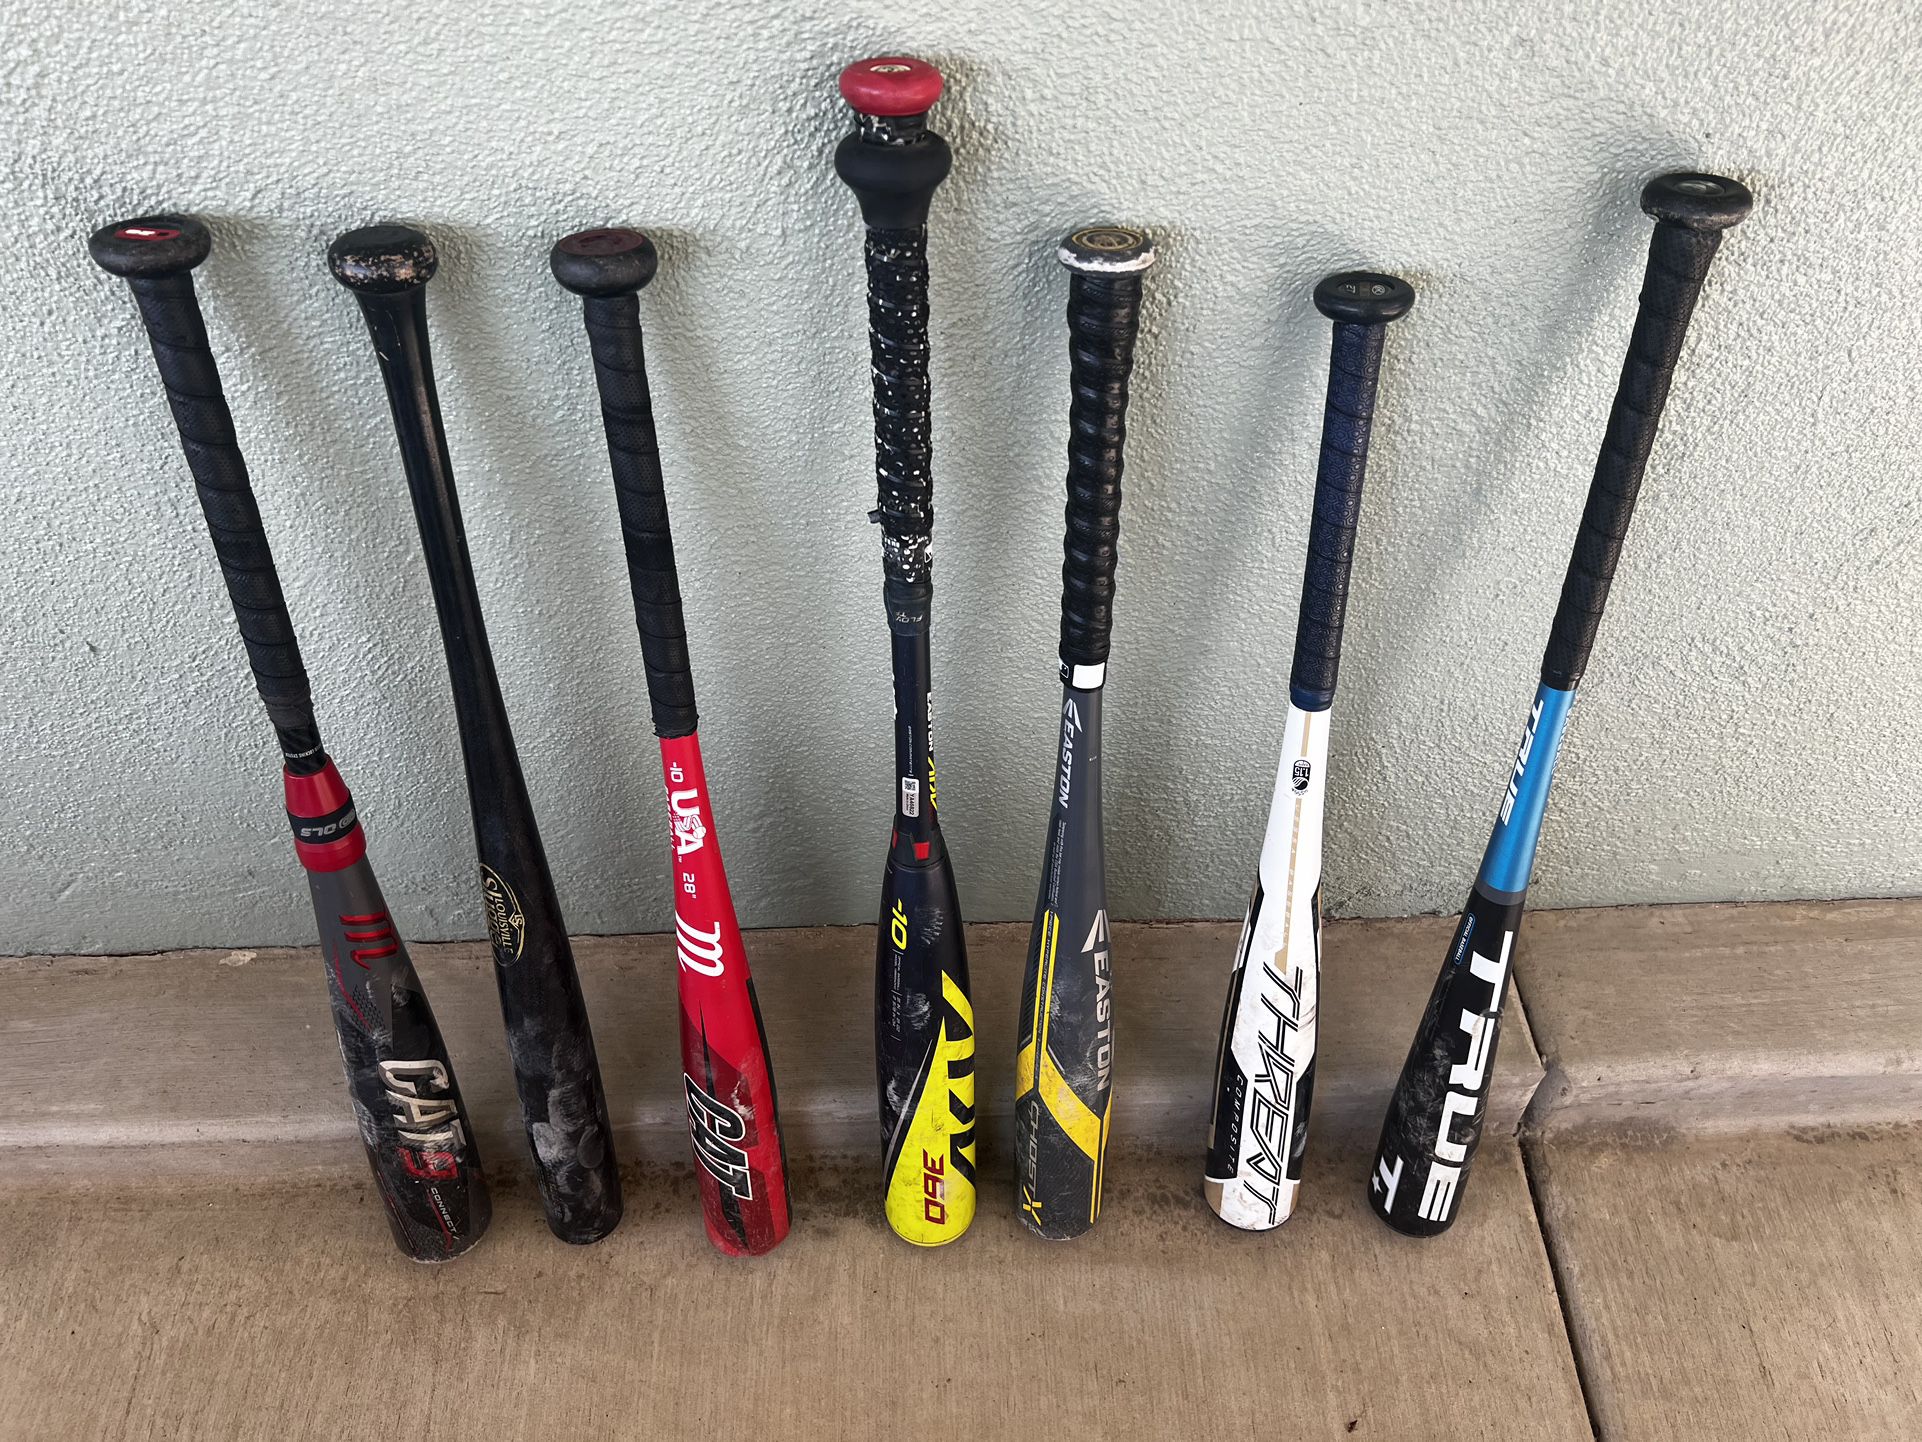 Multiple baseball bats USA/USSSA